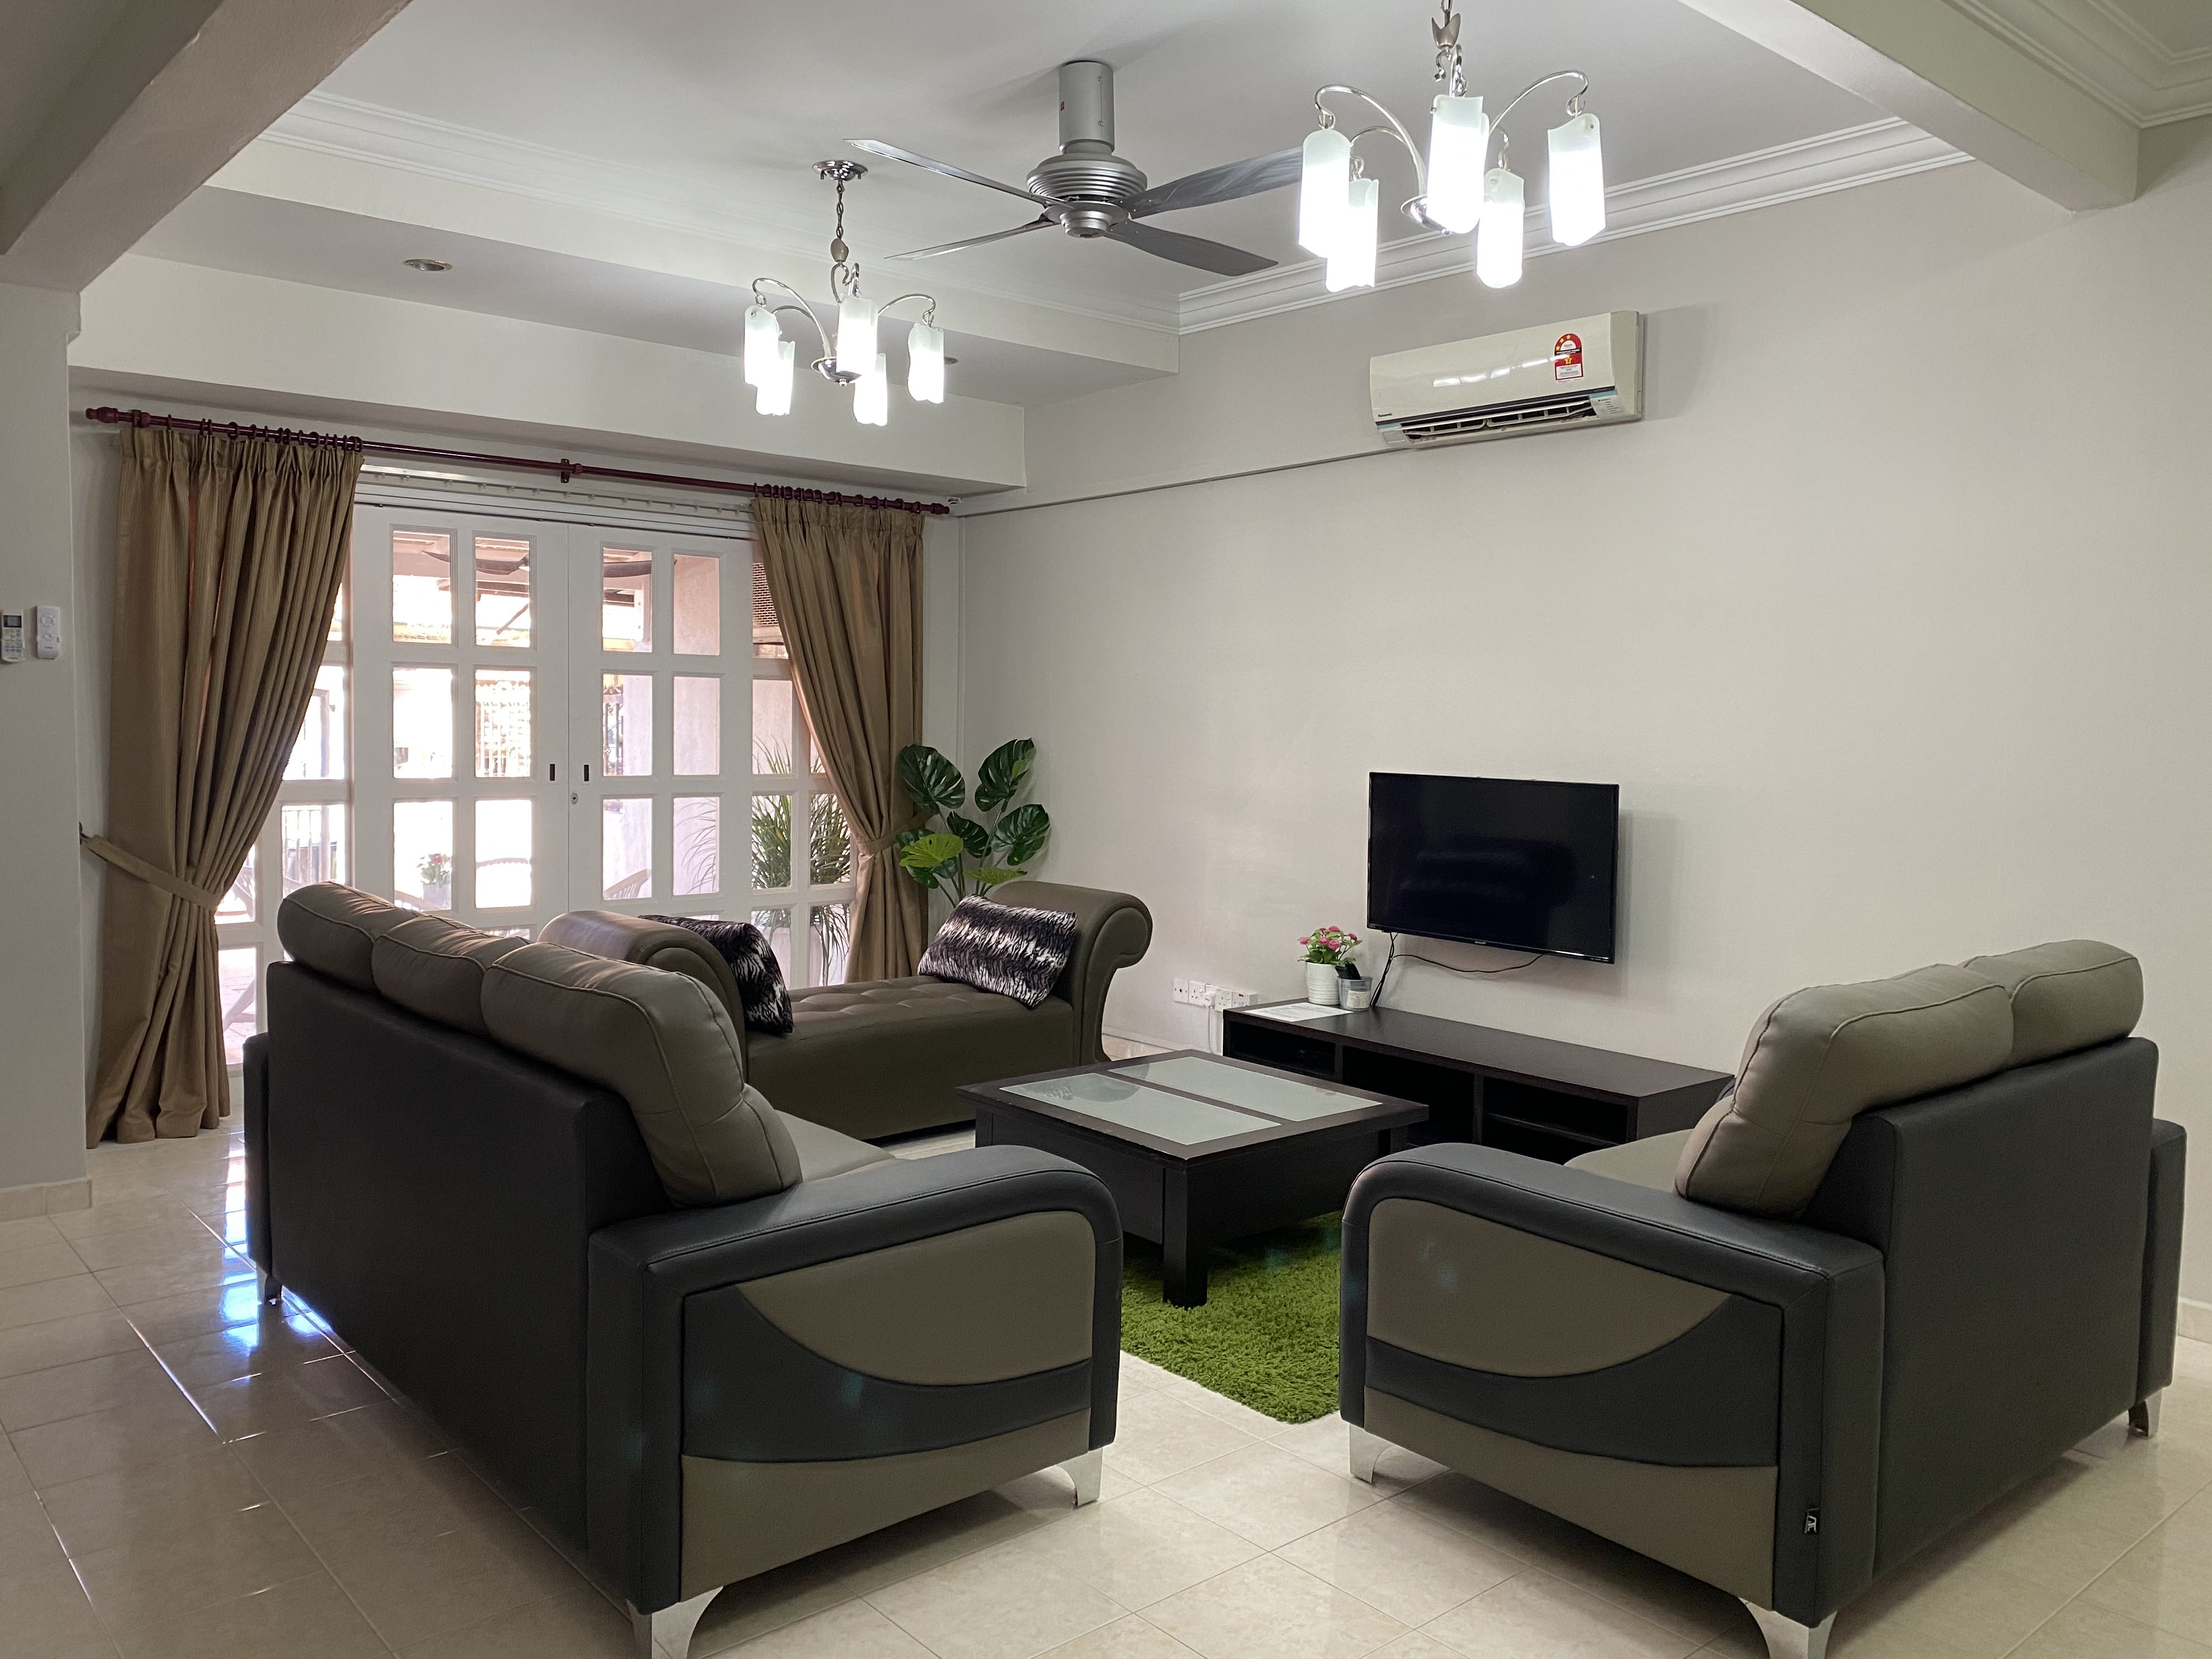 Amyrh Homestay Seksyen 3 Bandar Baru Bangi Houses For Rent In Bandar Baru Bangi Selangor Malaysia